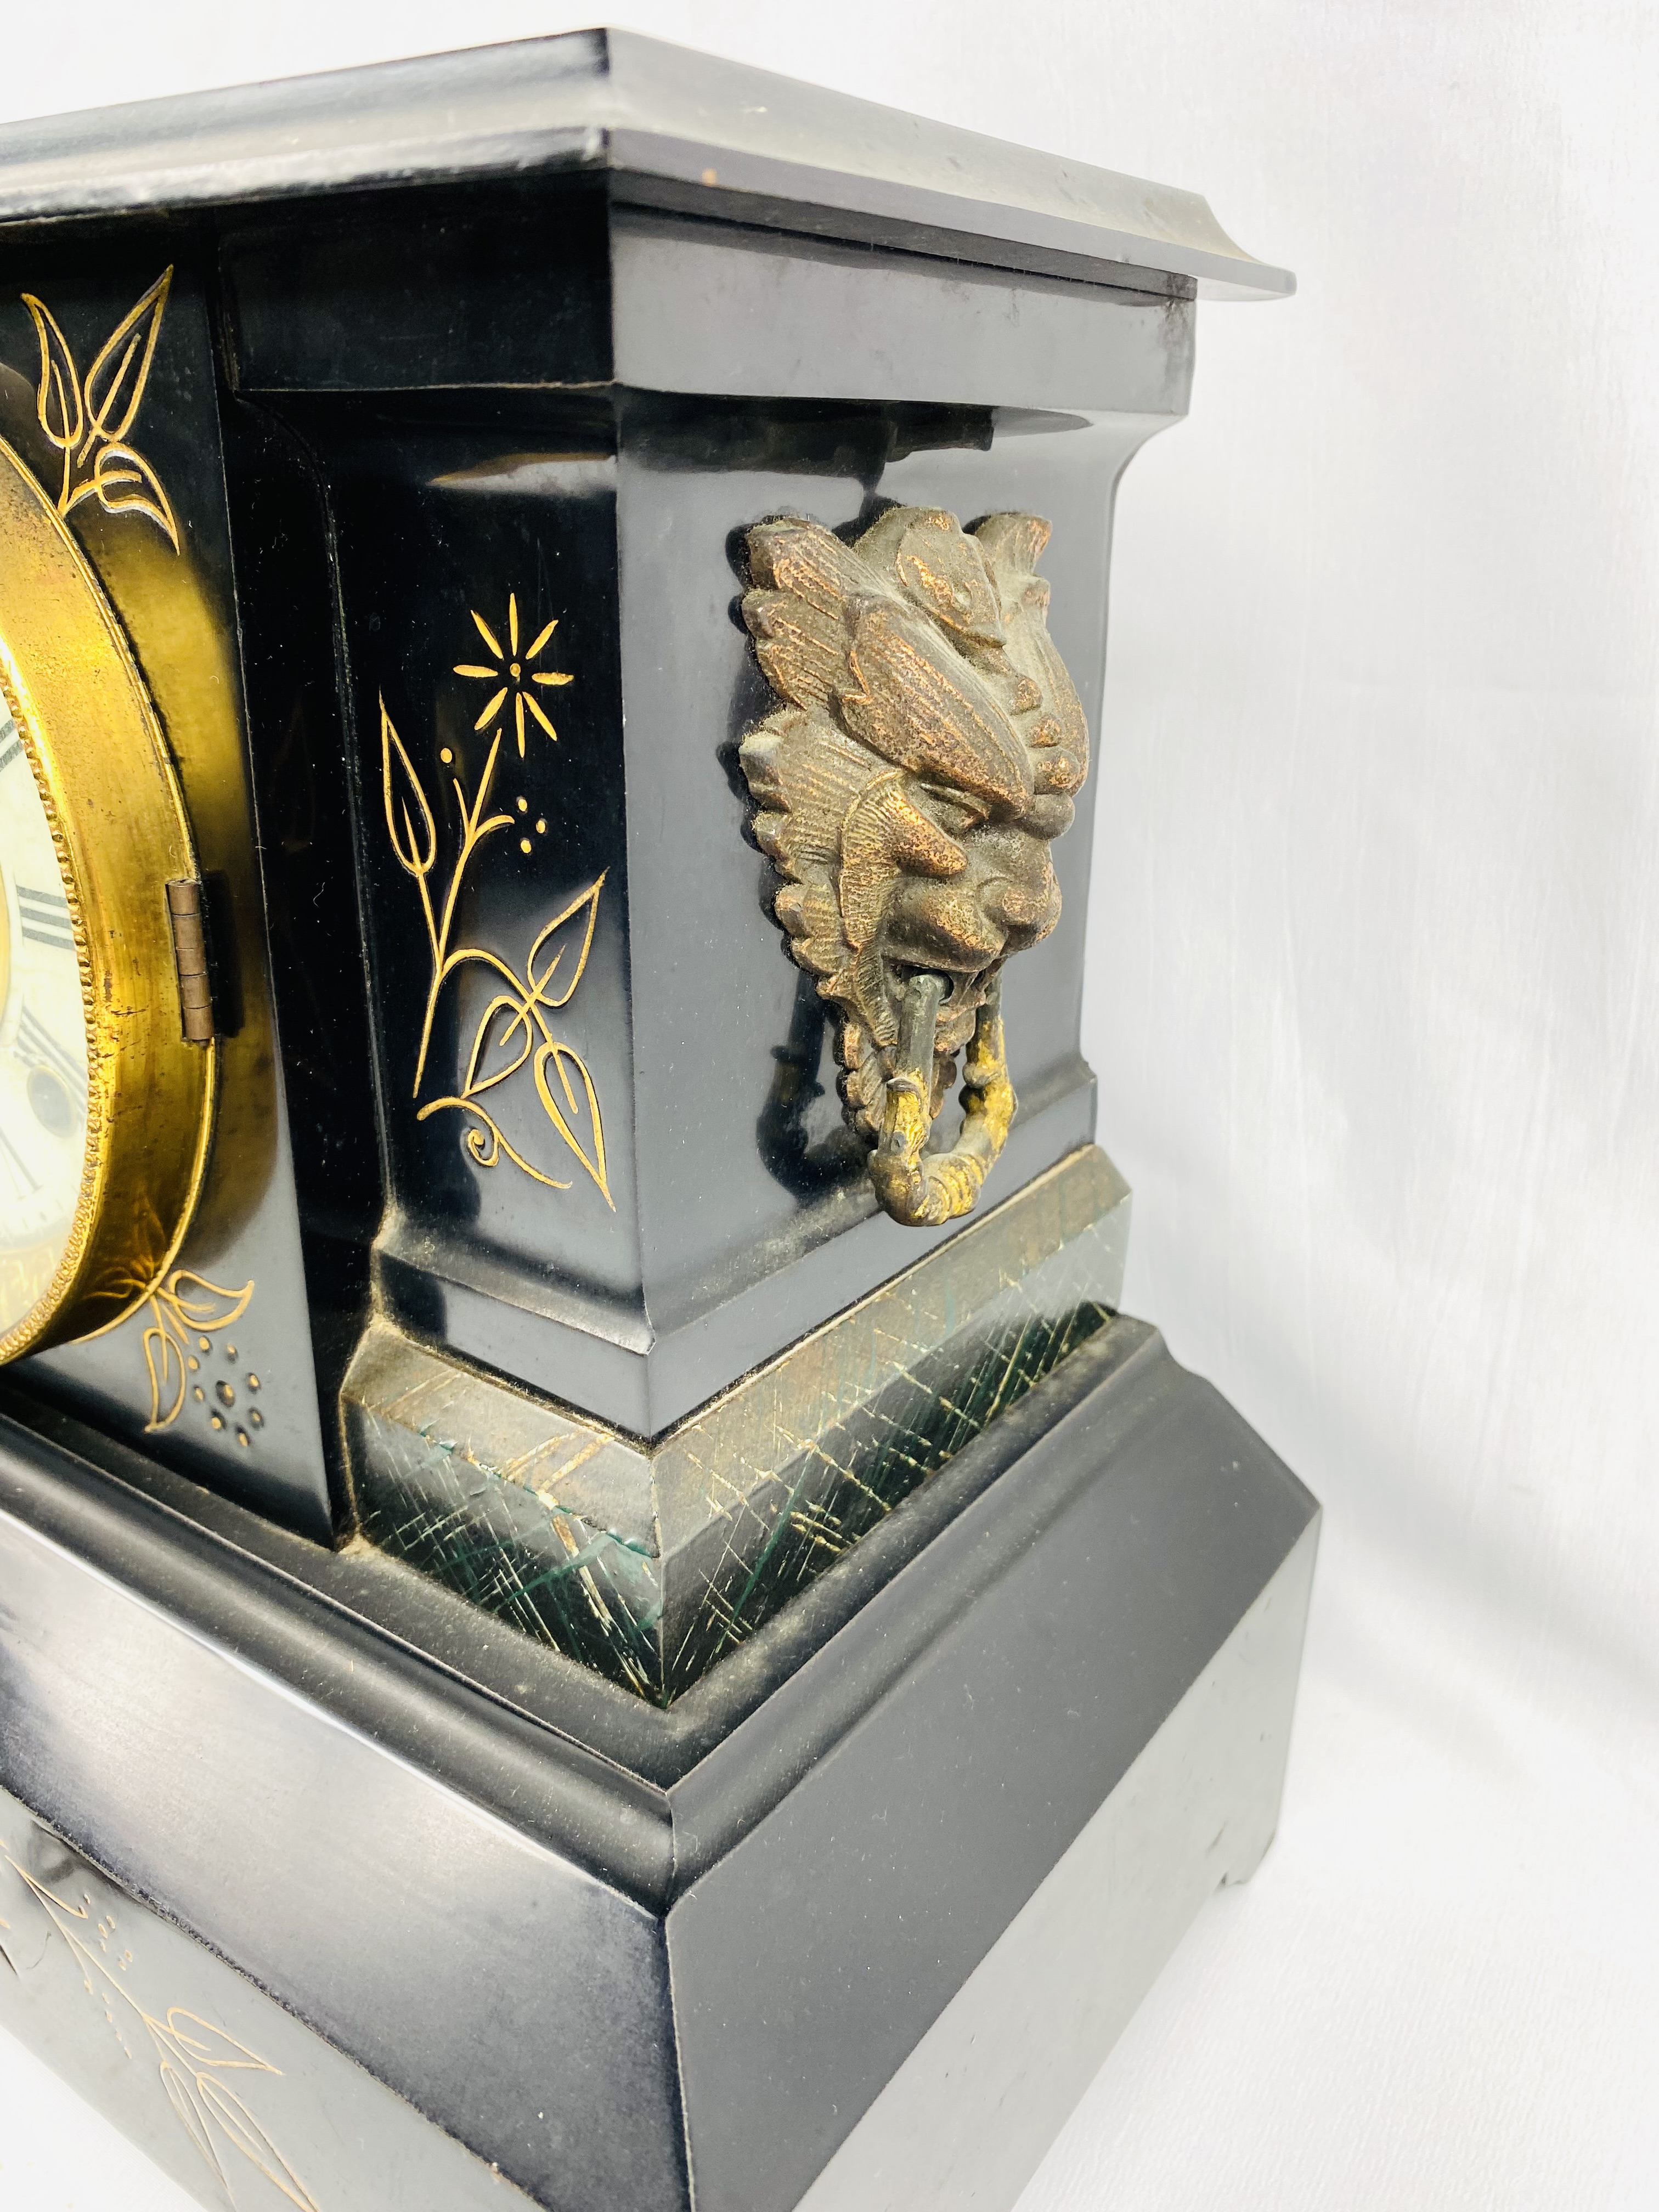 Ansonia mantel clock - Image 3 of 5